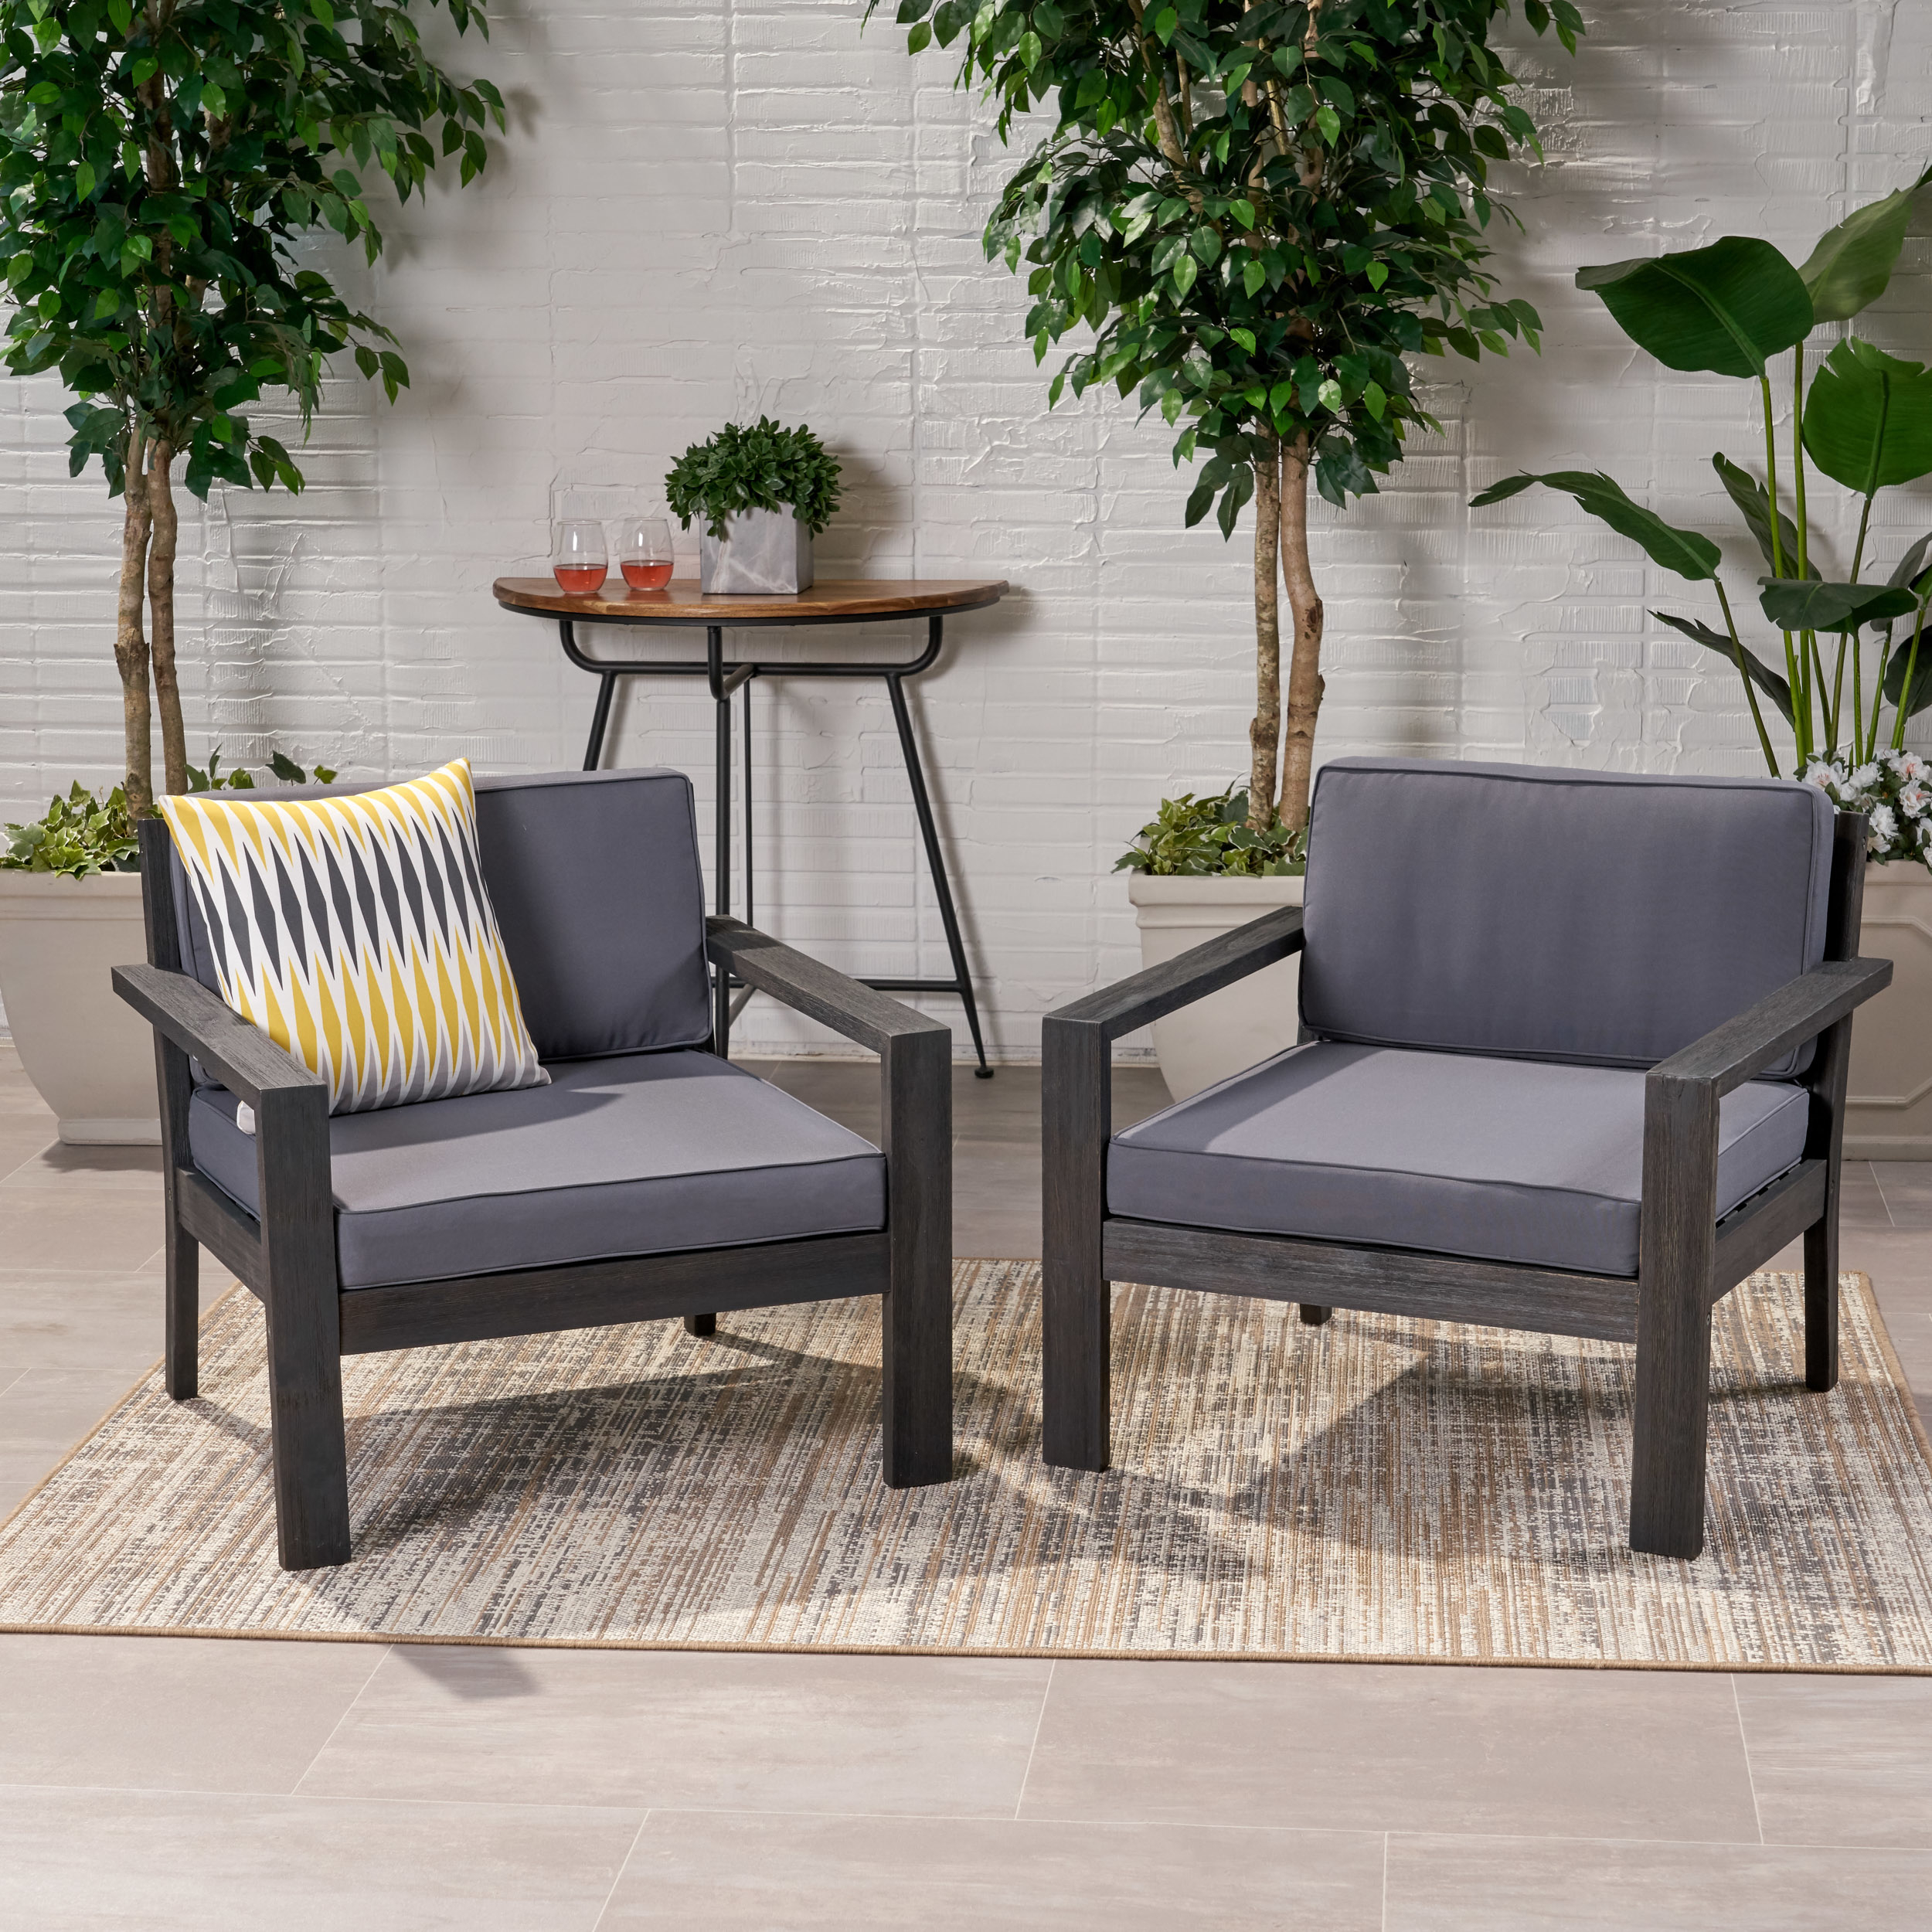 Susan Outdoor Acacia Wood Club Chairs With Cushions (Set Of 2) - Brushed Dark Gray Finish, Dark Gray